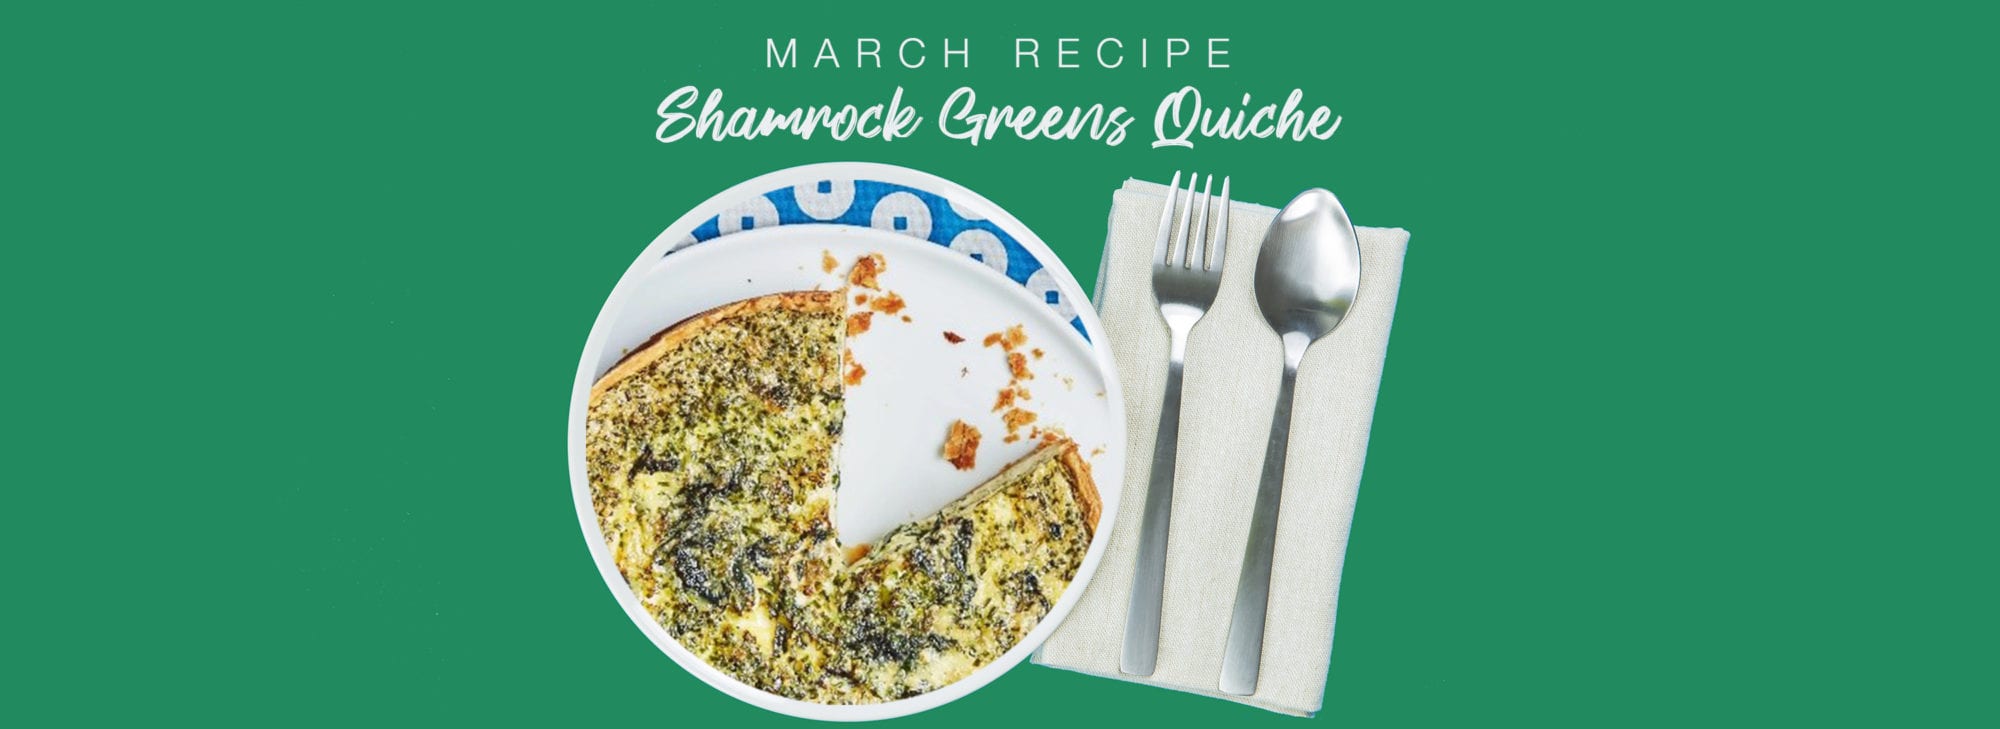 March Recipe: Shamrock Greens Quiche